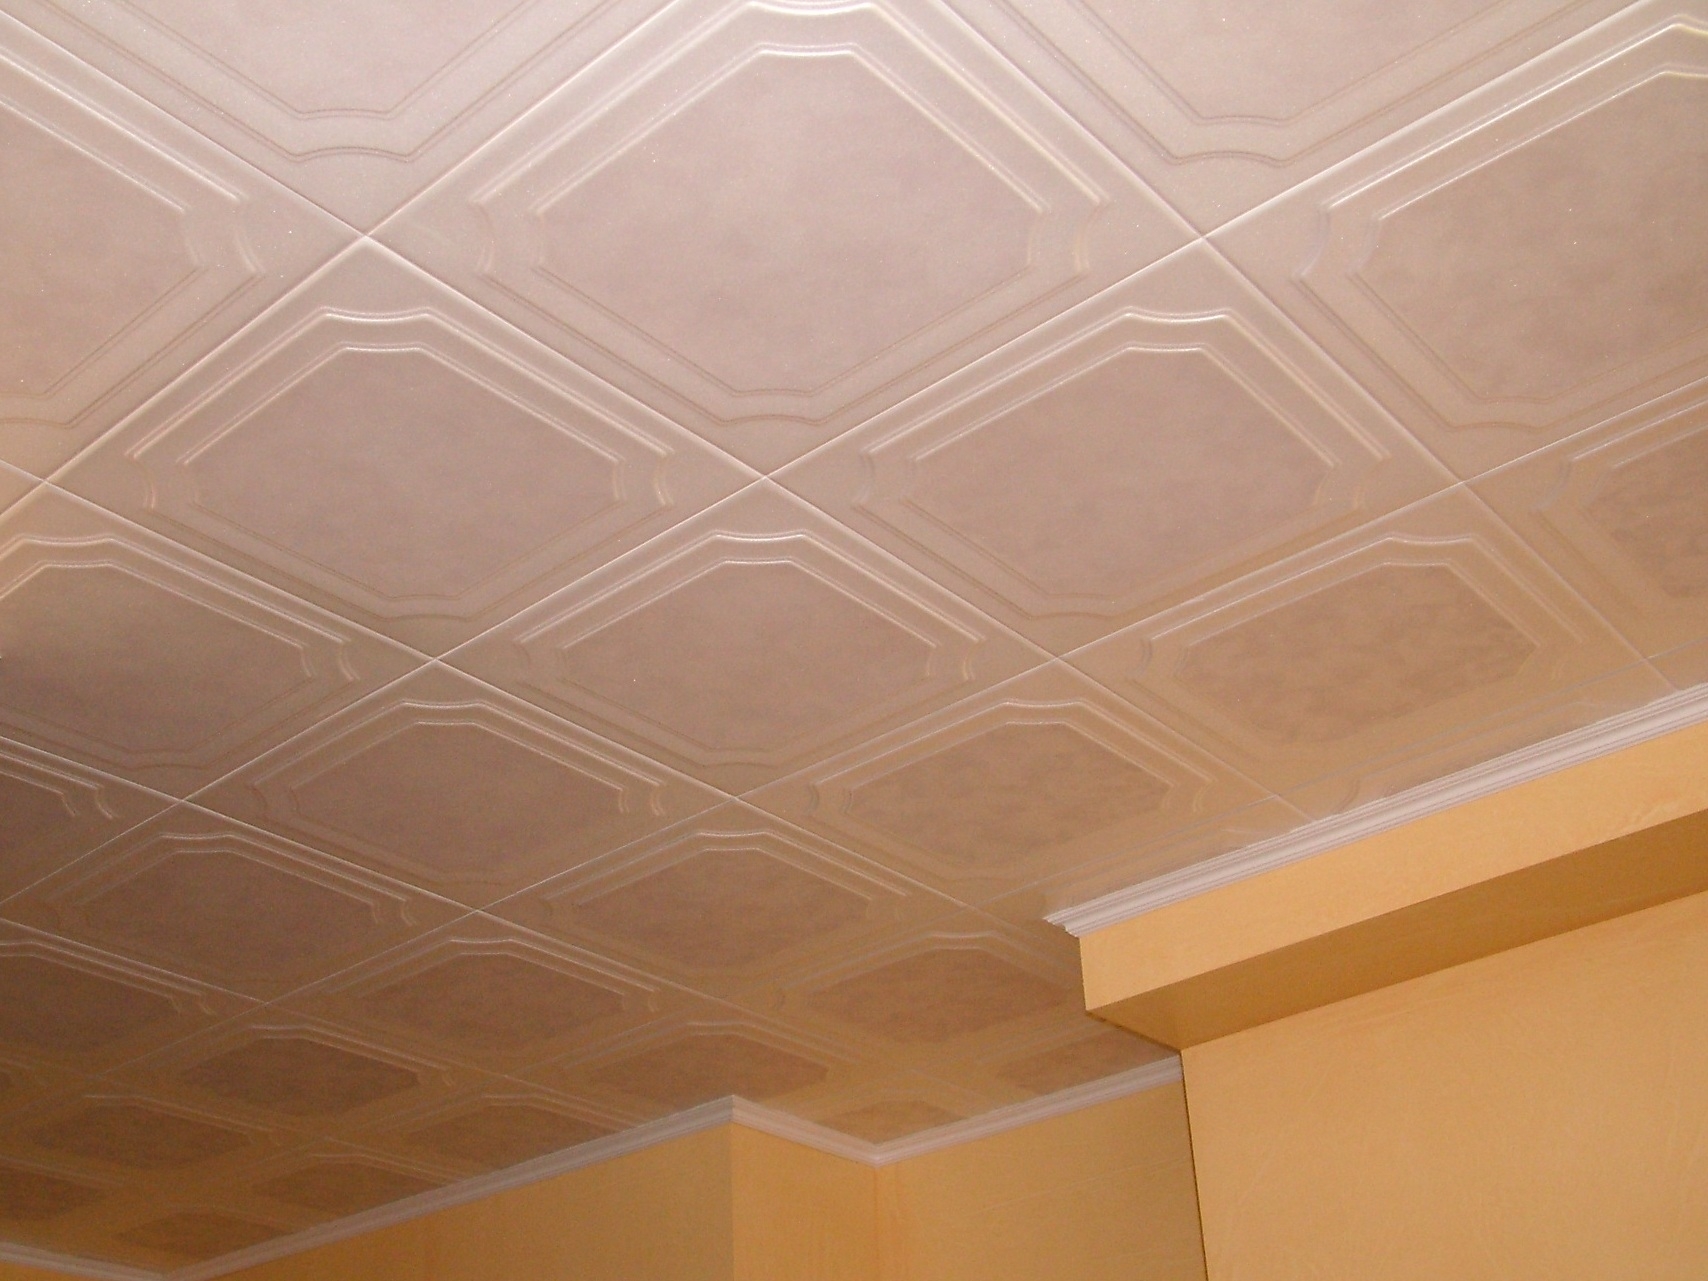 Patterned Polystyrene Ceiling Tiles Patterned Polystyrene Ceiling Tiles styrofoam ceiling tile with alluring decorative polystyrene 1708 X 1281